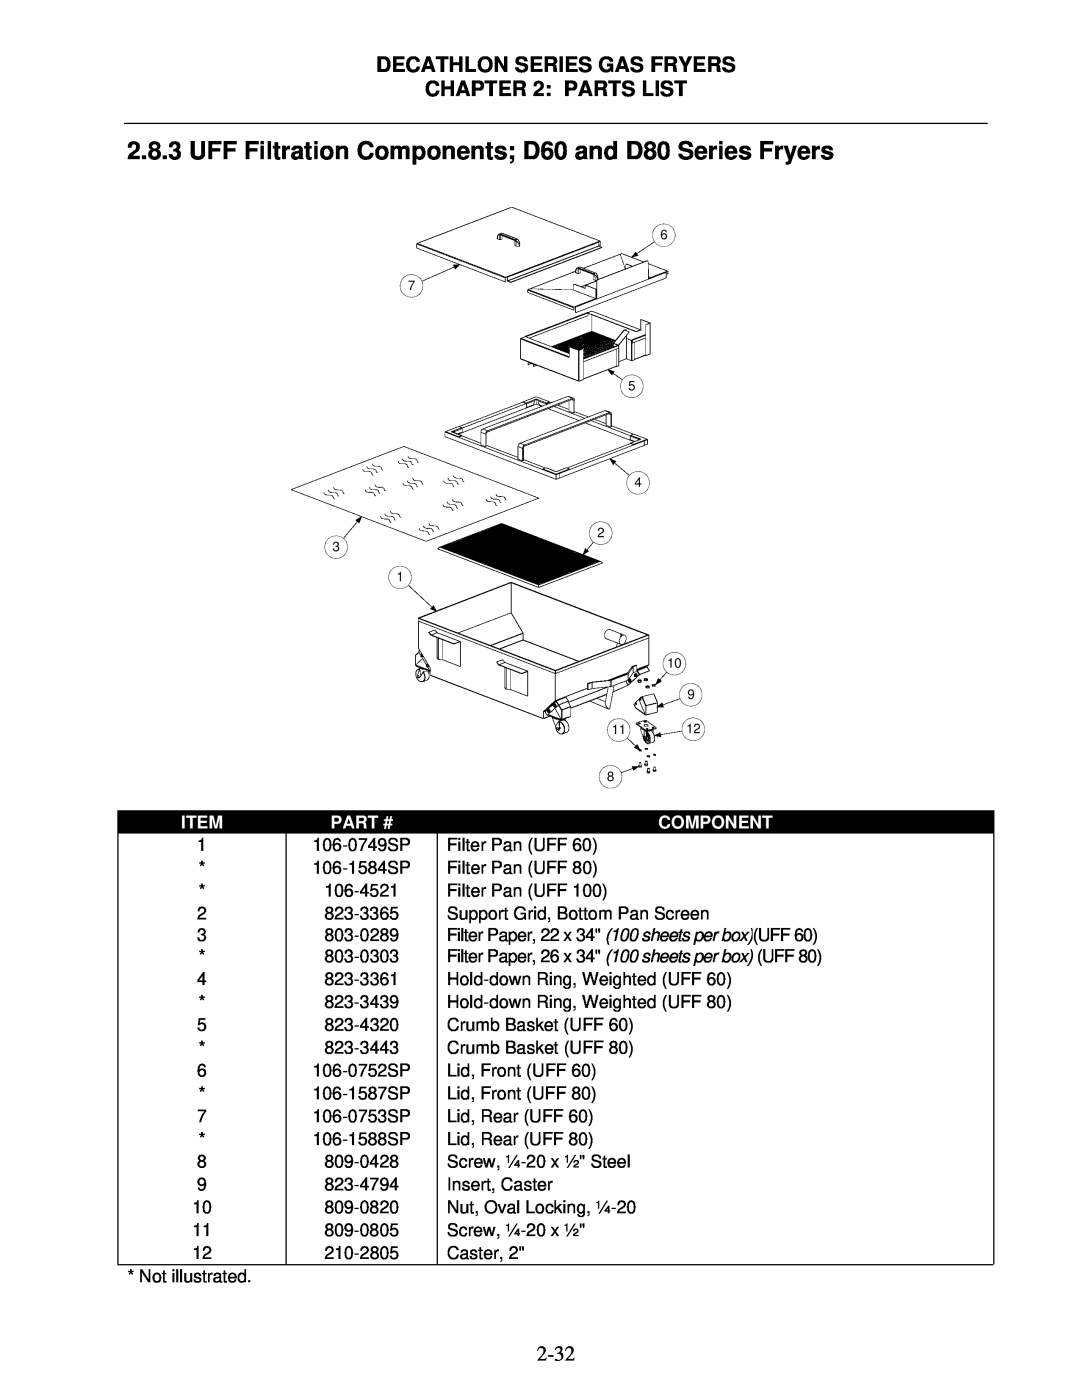 Frymaster FPD, SCFD manual Decathlon Series Gas Fryers : Parts List, Part #, Component, 106-0749SPFilter Pan UFF 